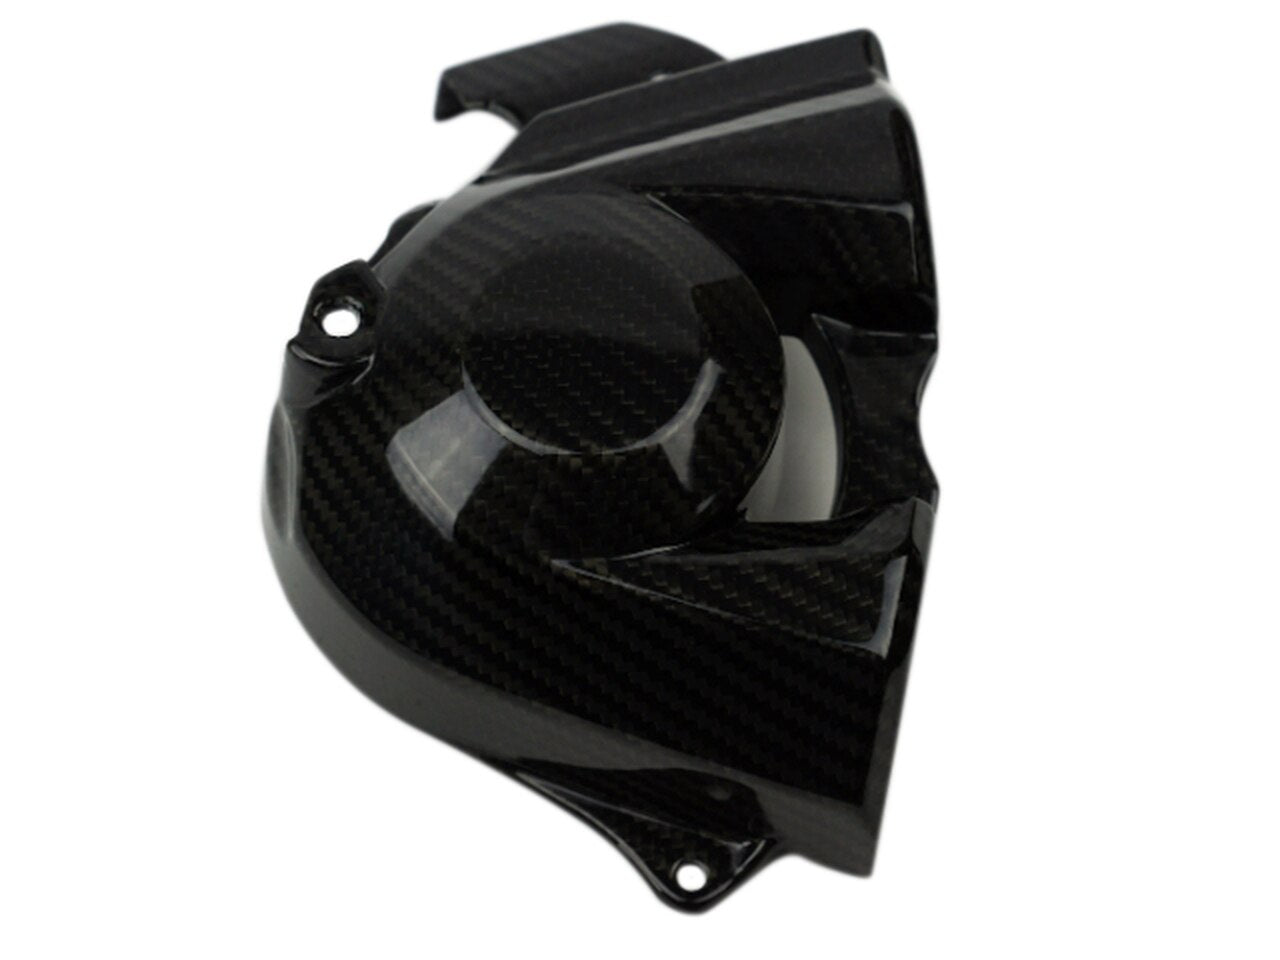 Motocomposites Sprocket Cover in Carbon with Fiberglass for Kawasaki Ninja H2